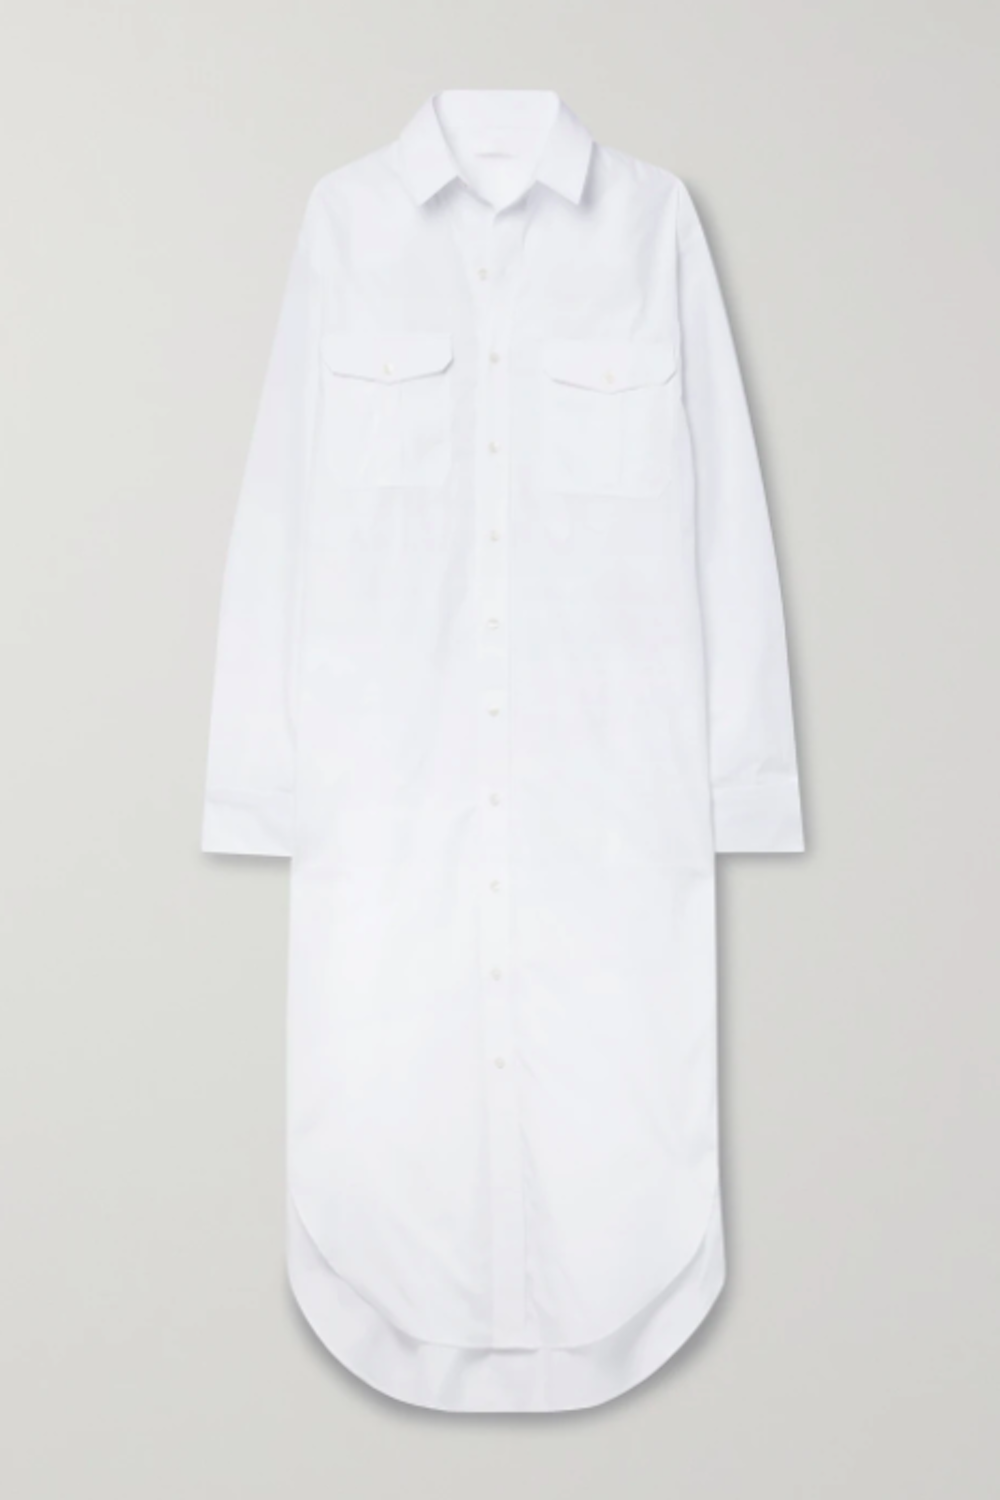 White-Shirt